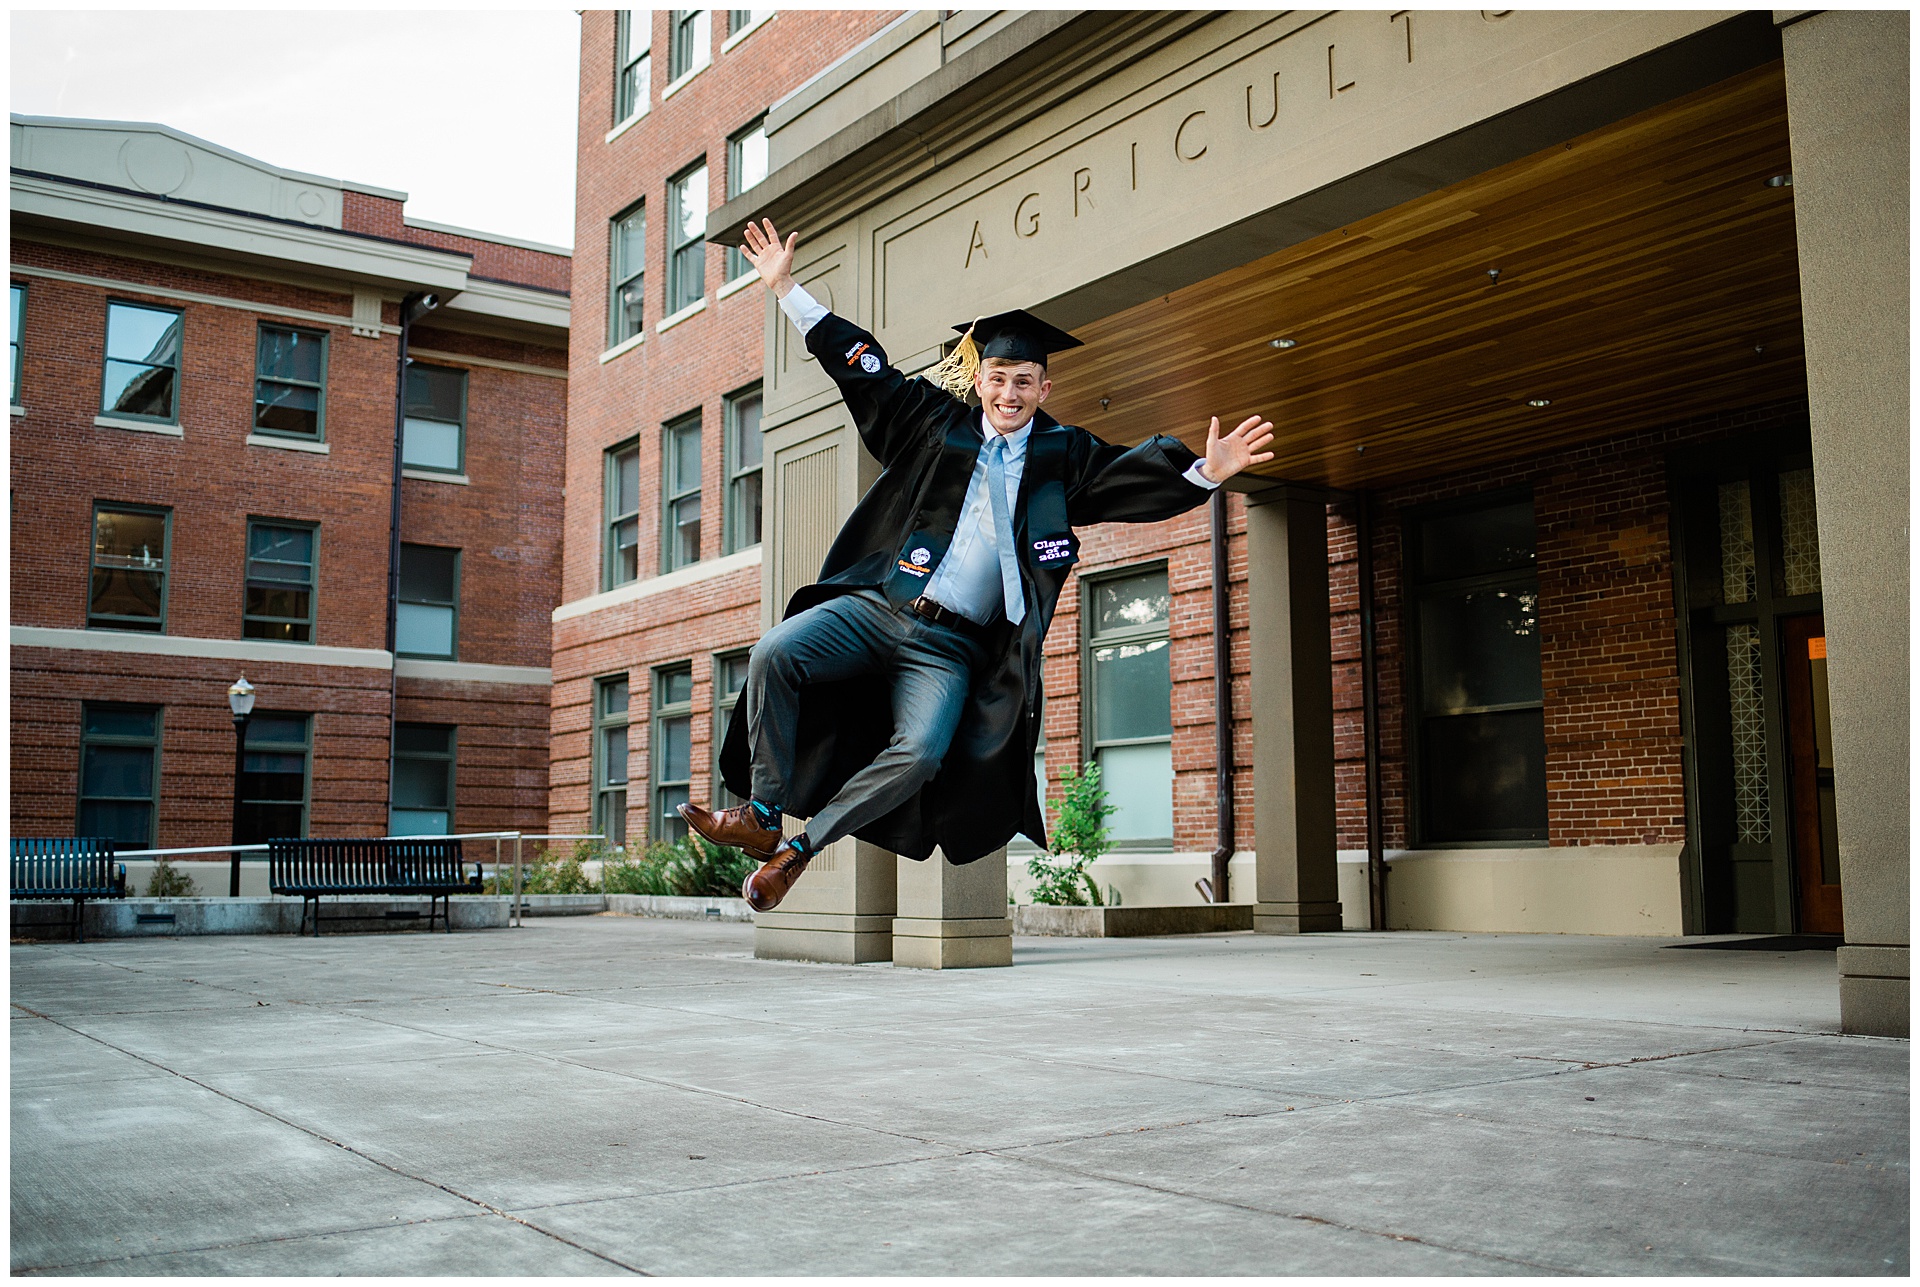 Graduation senior portrait by Corvallis Photographer Alison Smith